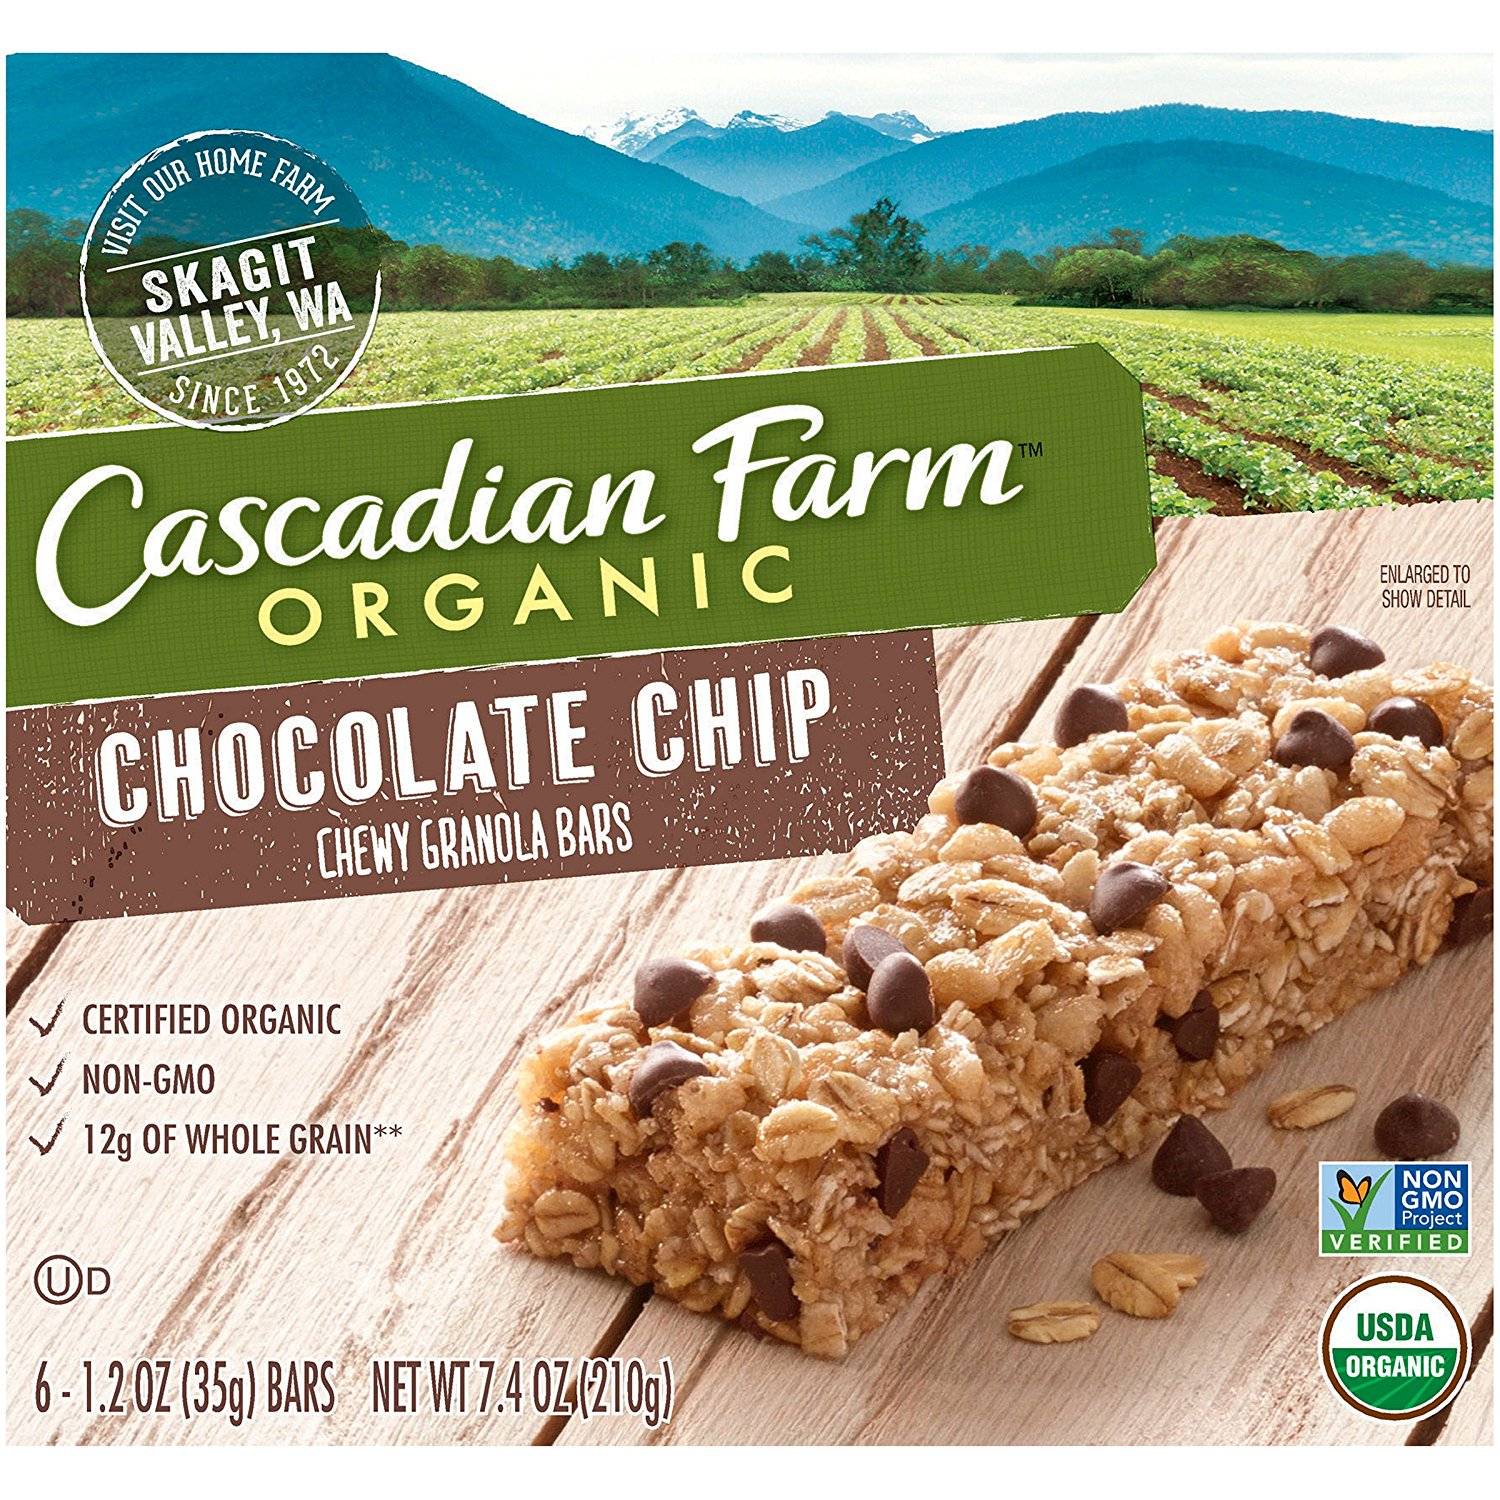 Cascadian Farm Chewy Granola Bar Organic non-GMO Chocolate Chip 6 Bars Only $2.54!